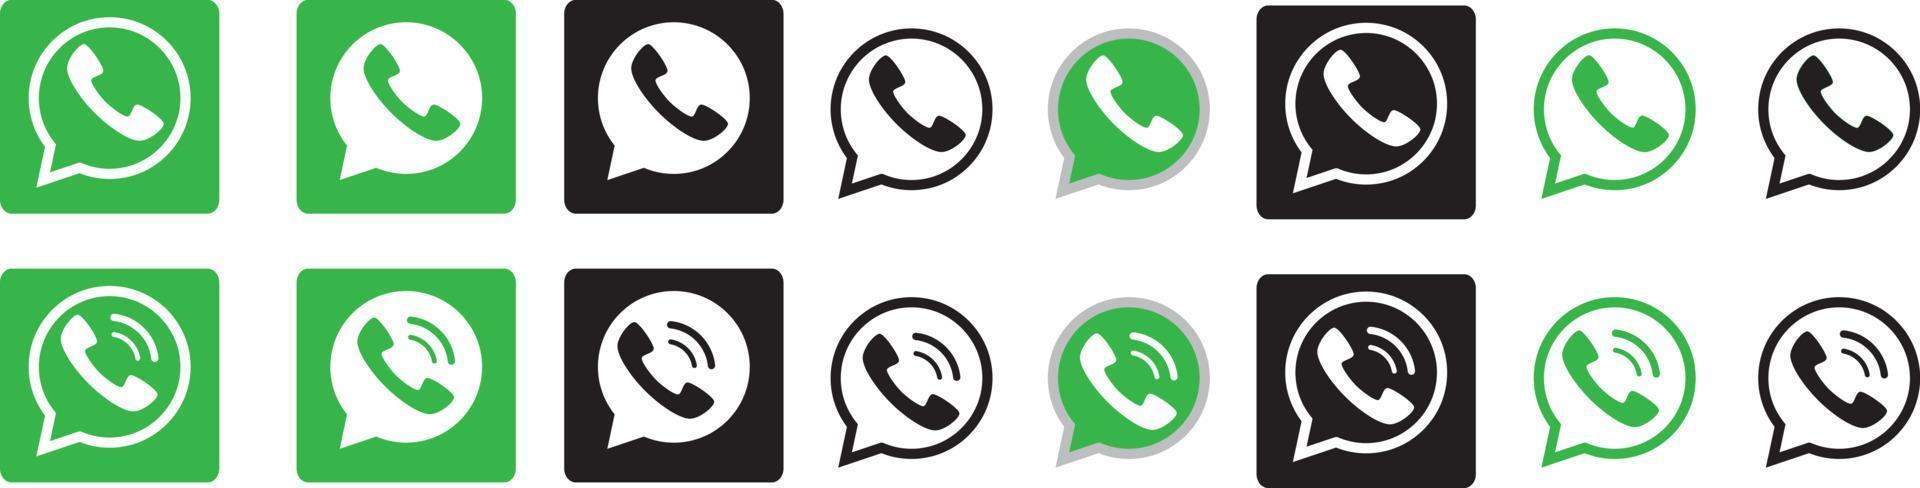 WhatsApp-Logo-Set. whatsapp-satz von social-media-logos. vectro moderne Telefonikone in der Blasenrede vektor